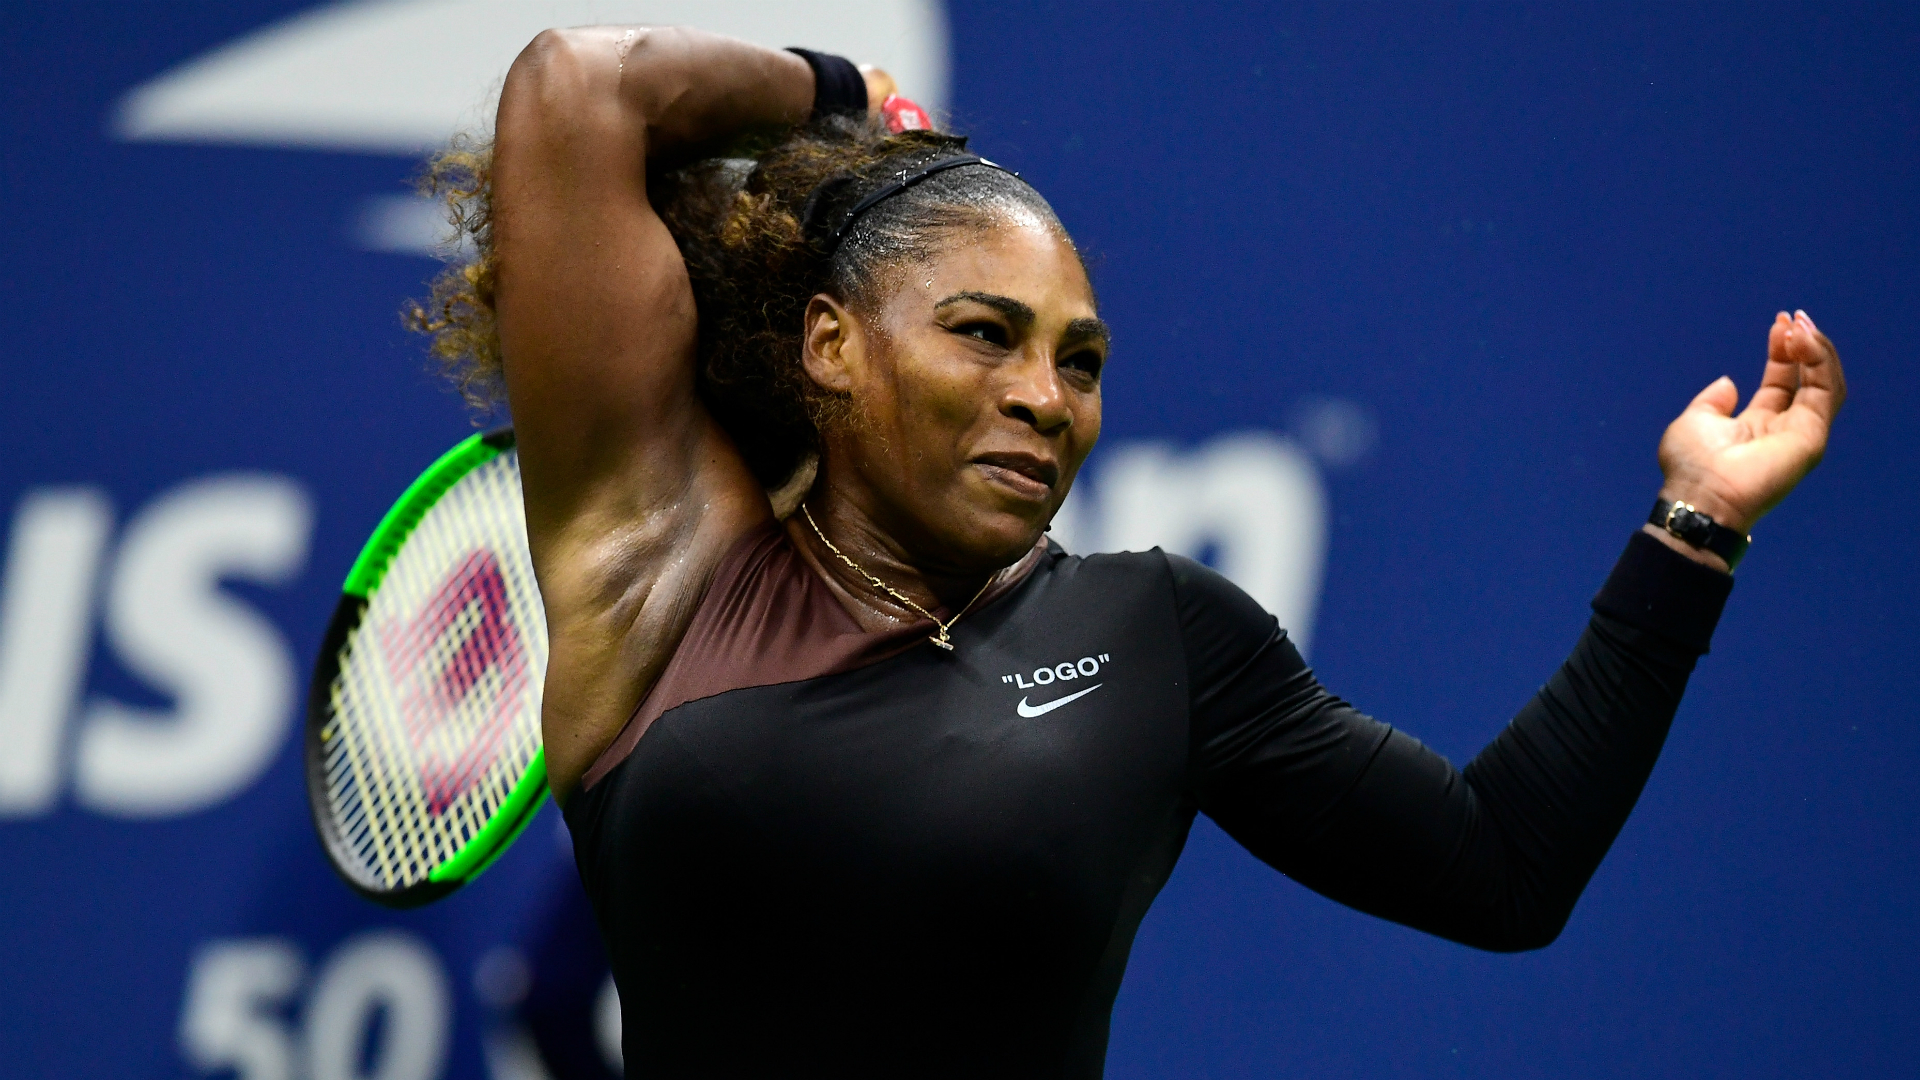 WTA Tour: Serena Williams will win more slams - Monica Seles | Sporting News Australia1920 x 1080